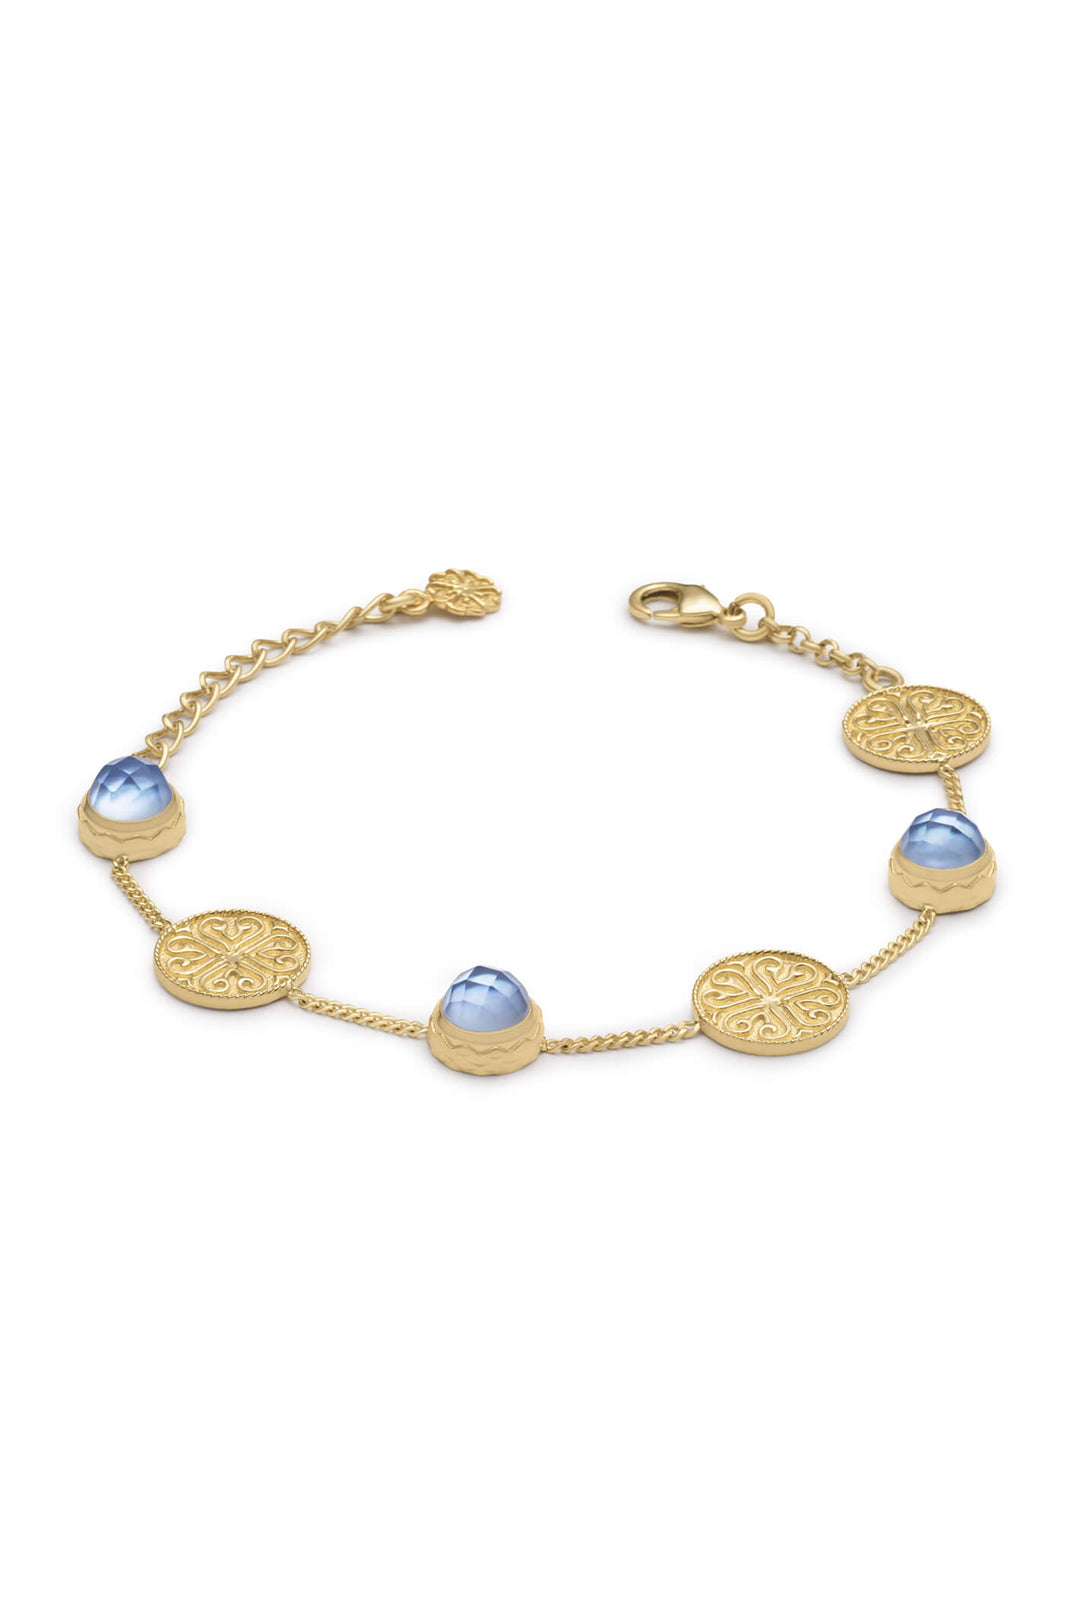 Azuni Apollo Tanzanite Blue Faceted Doublet and Ornate Disc Bracelet - Experience Boutique